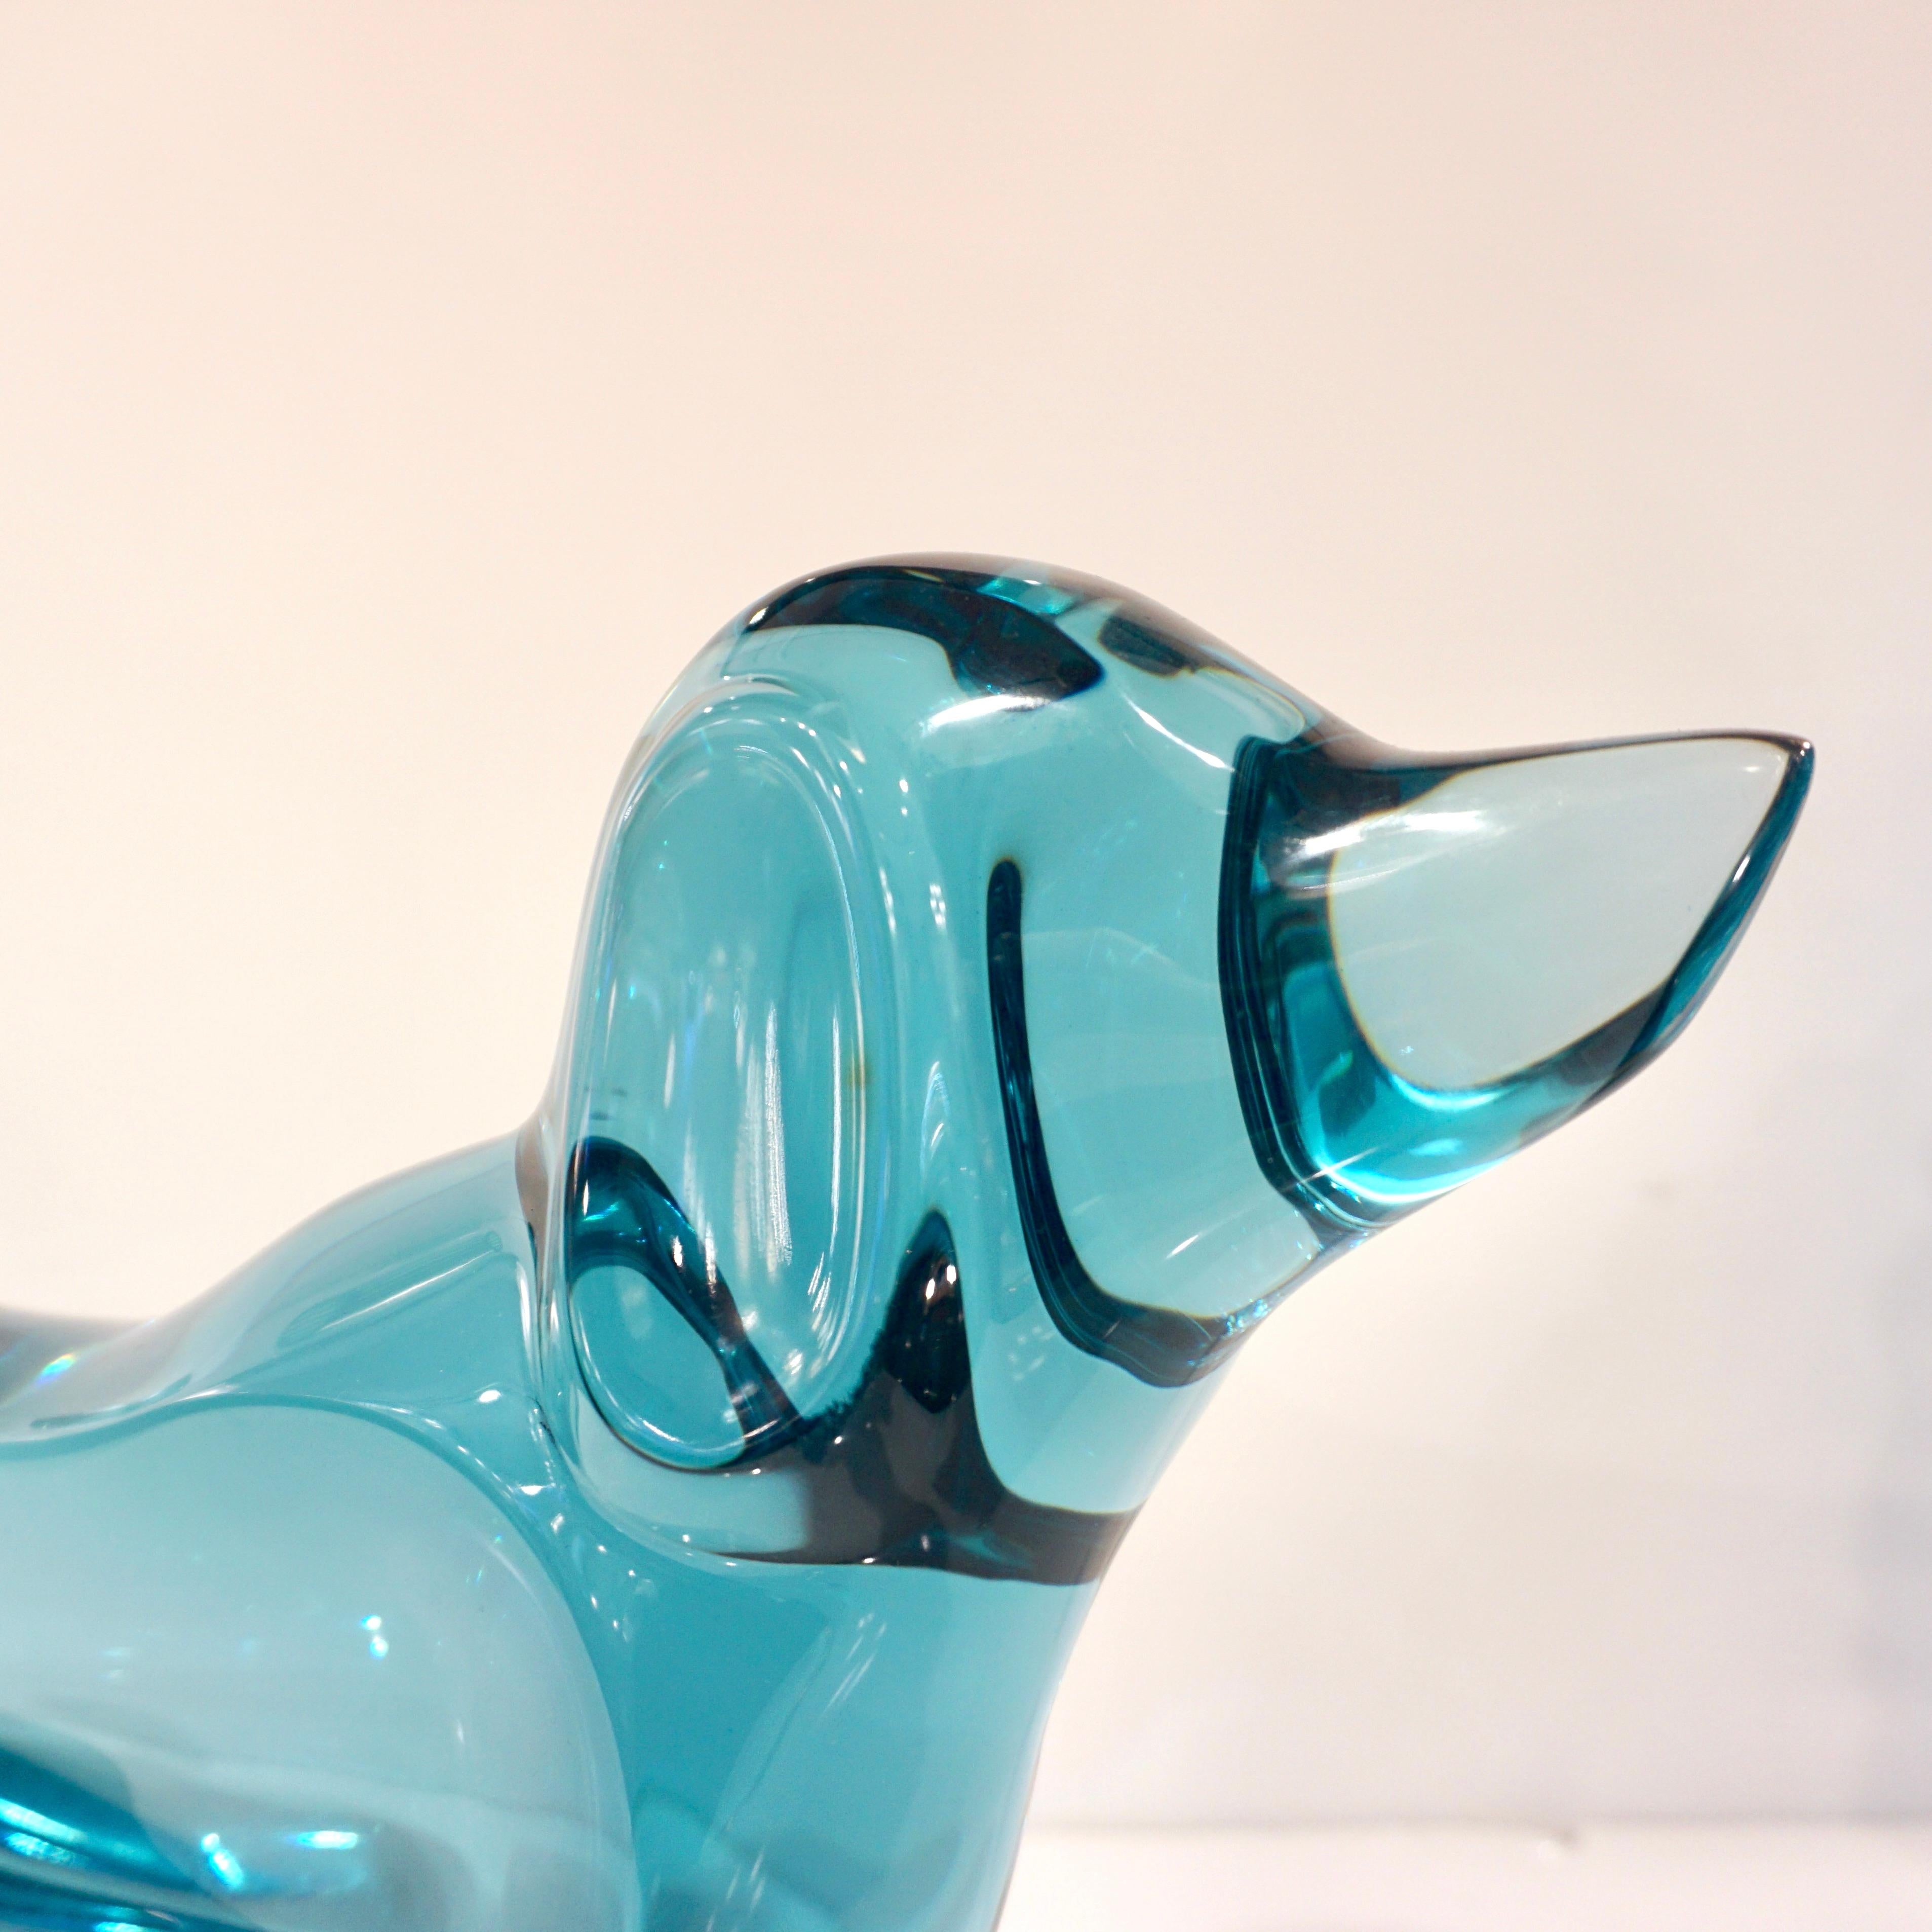 Organic Modern Contemporary Minimalist Marine Azur Blue Modern Lucite Sculpture of Poodle Dog